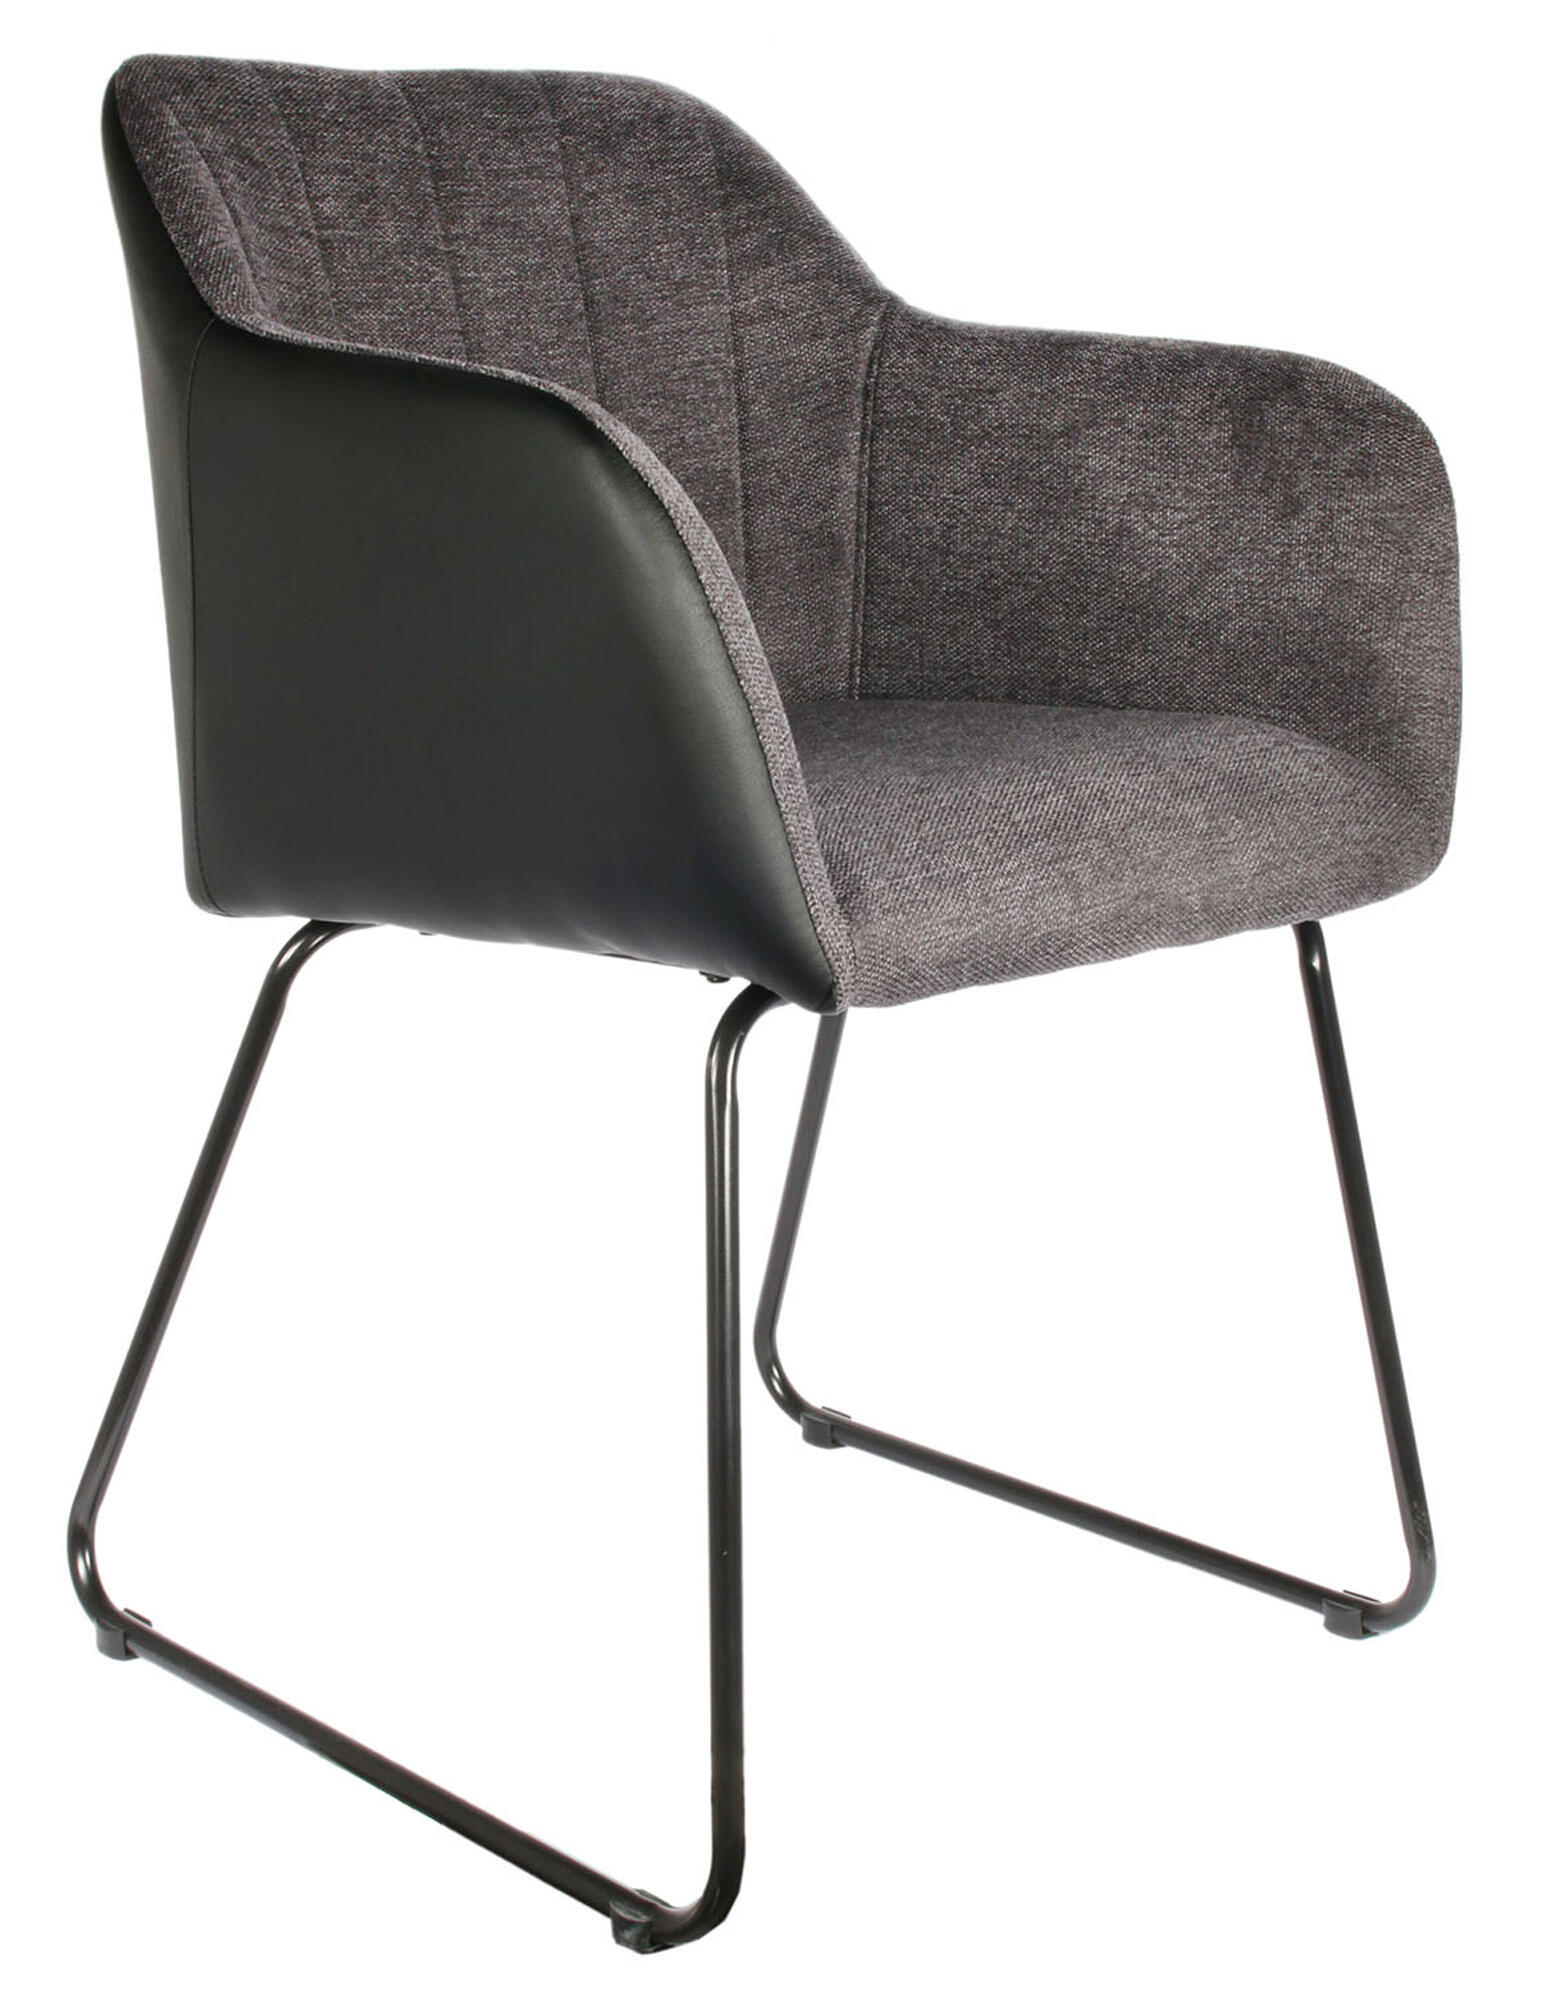 Set de 2 sillas de comedor memphis de madera color gris de 84x60,5x56cm